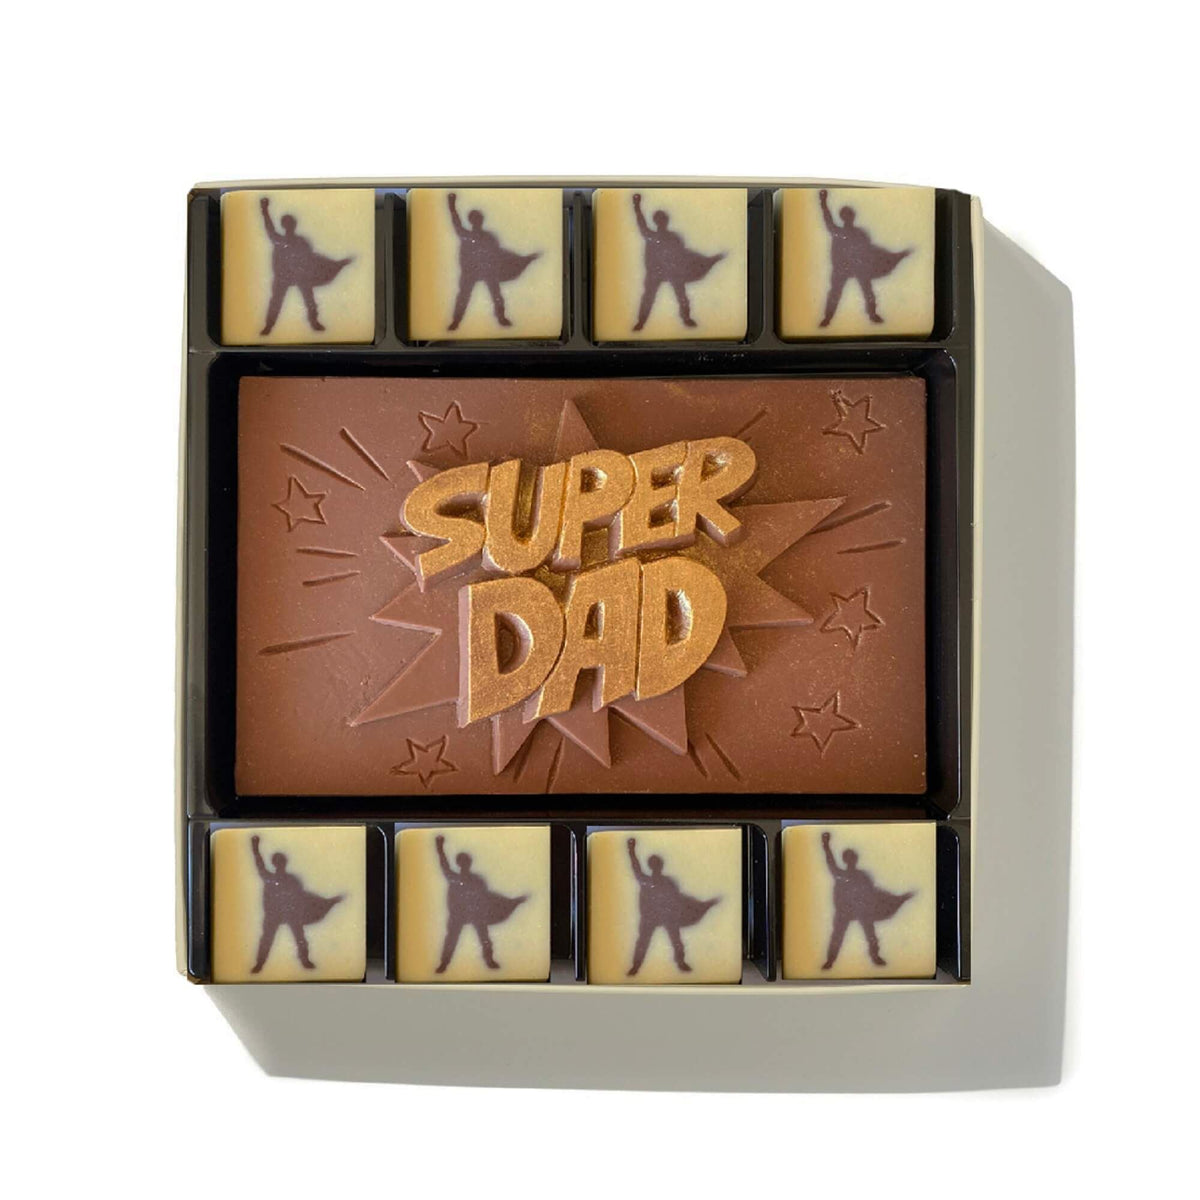 Super Dad Chocolate Box